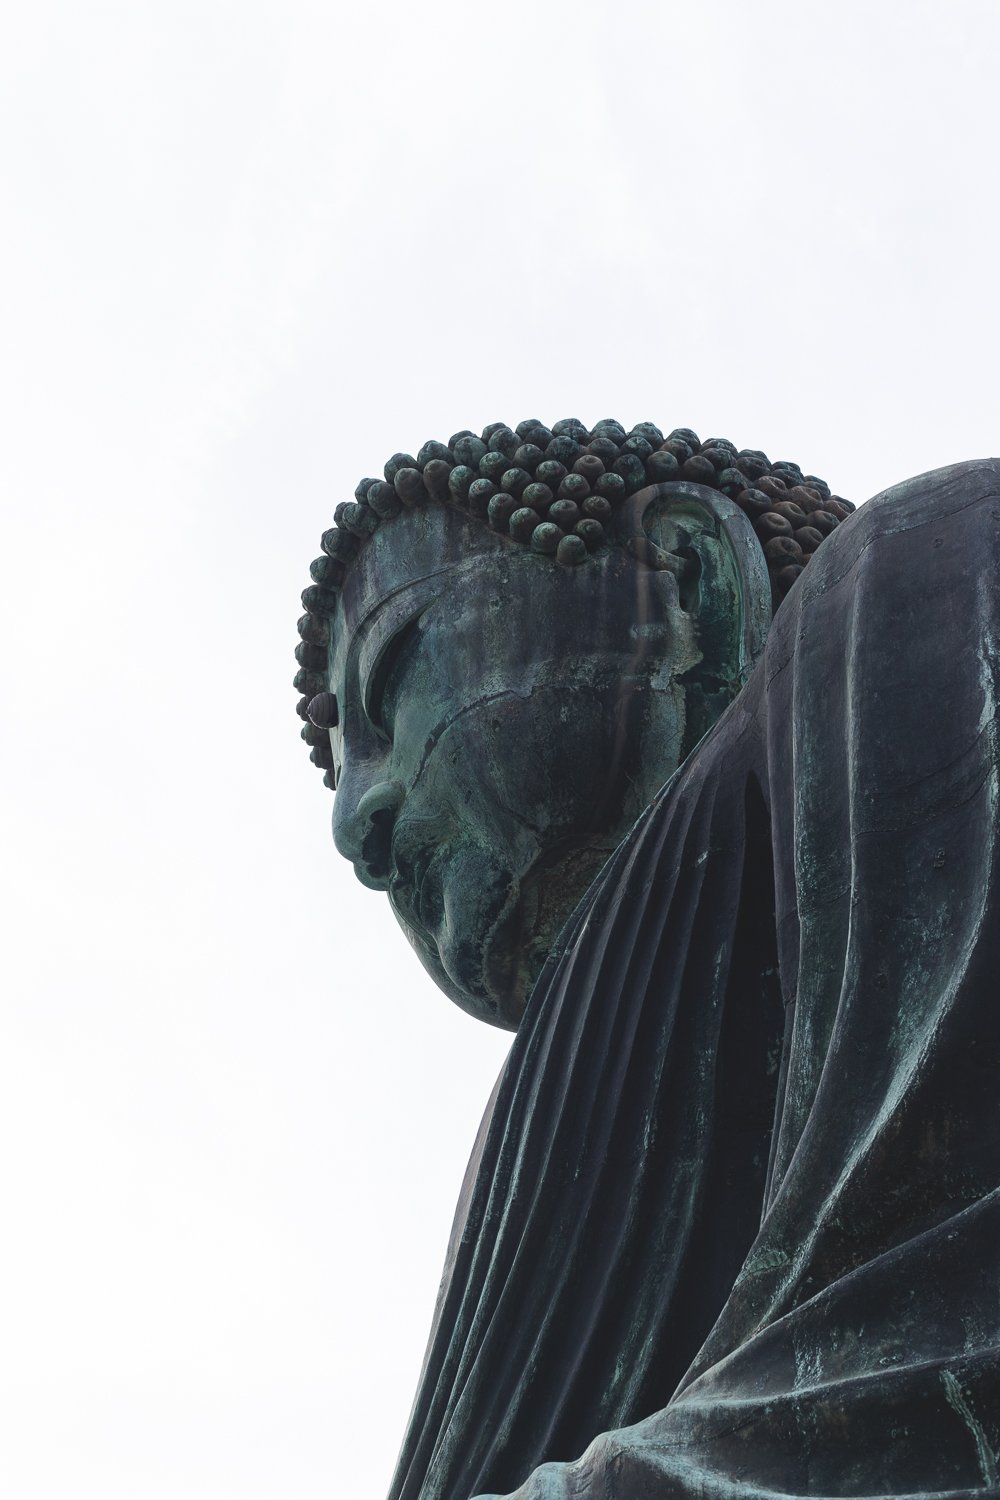 Le visage du grand bouddha de Kamakura